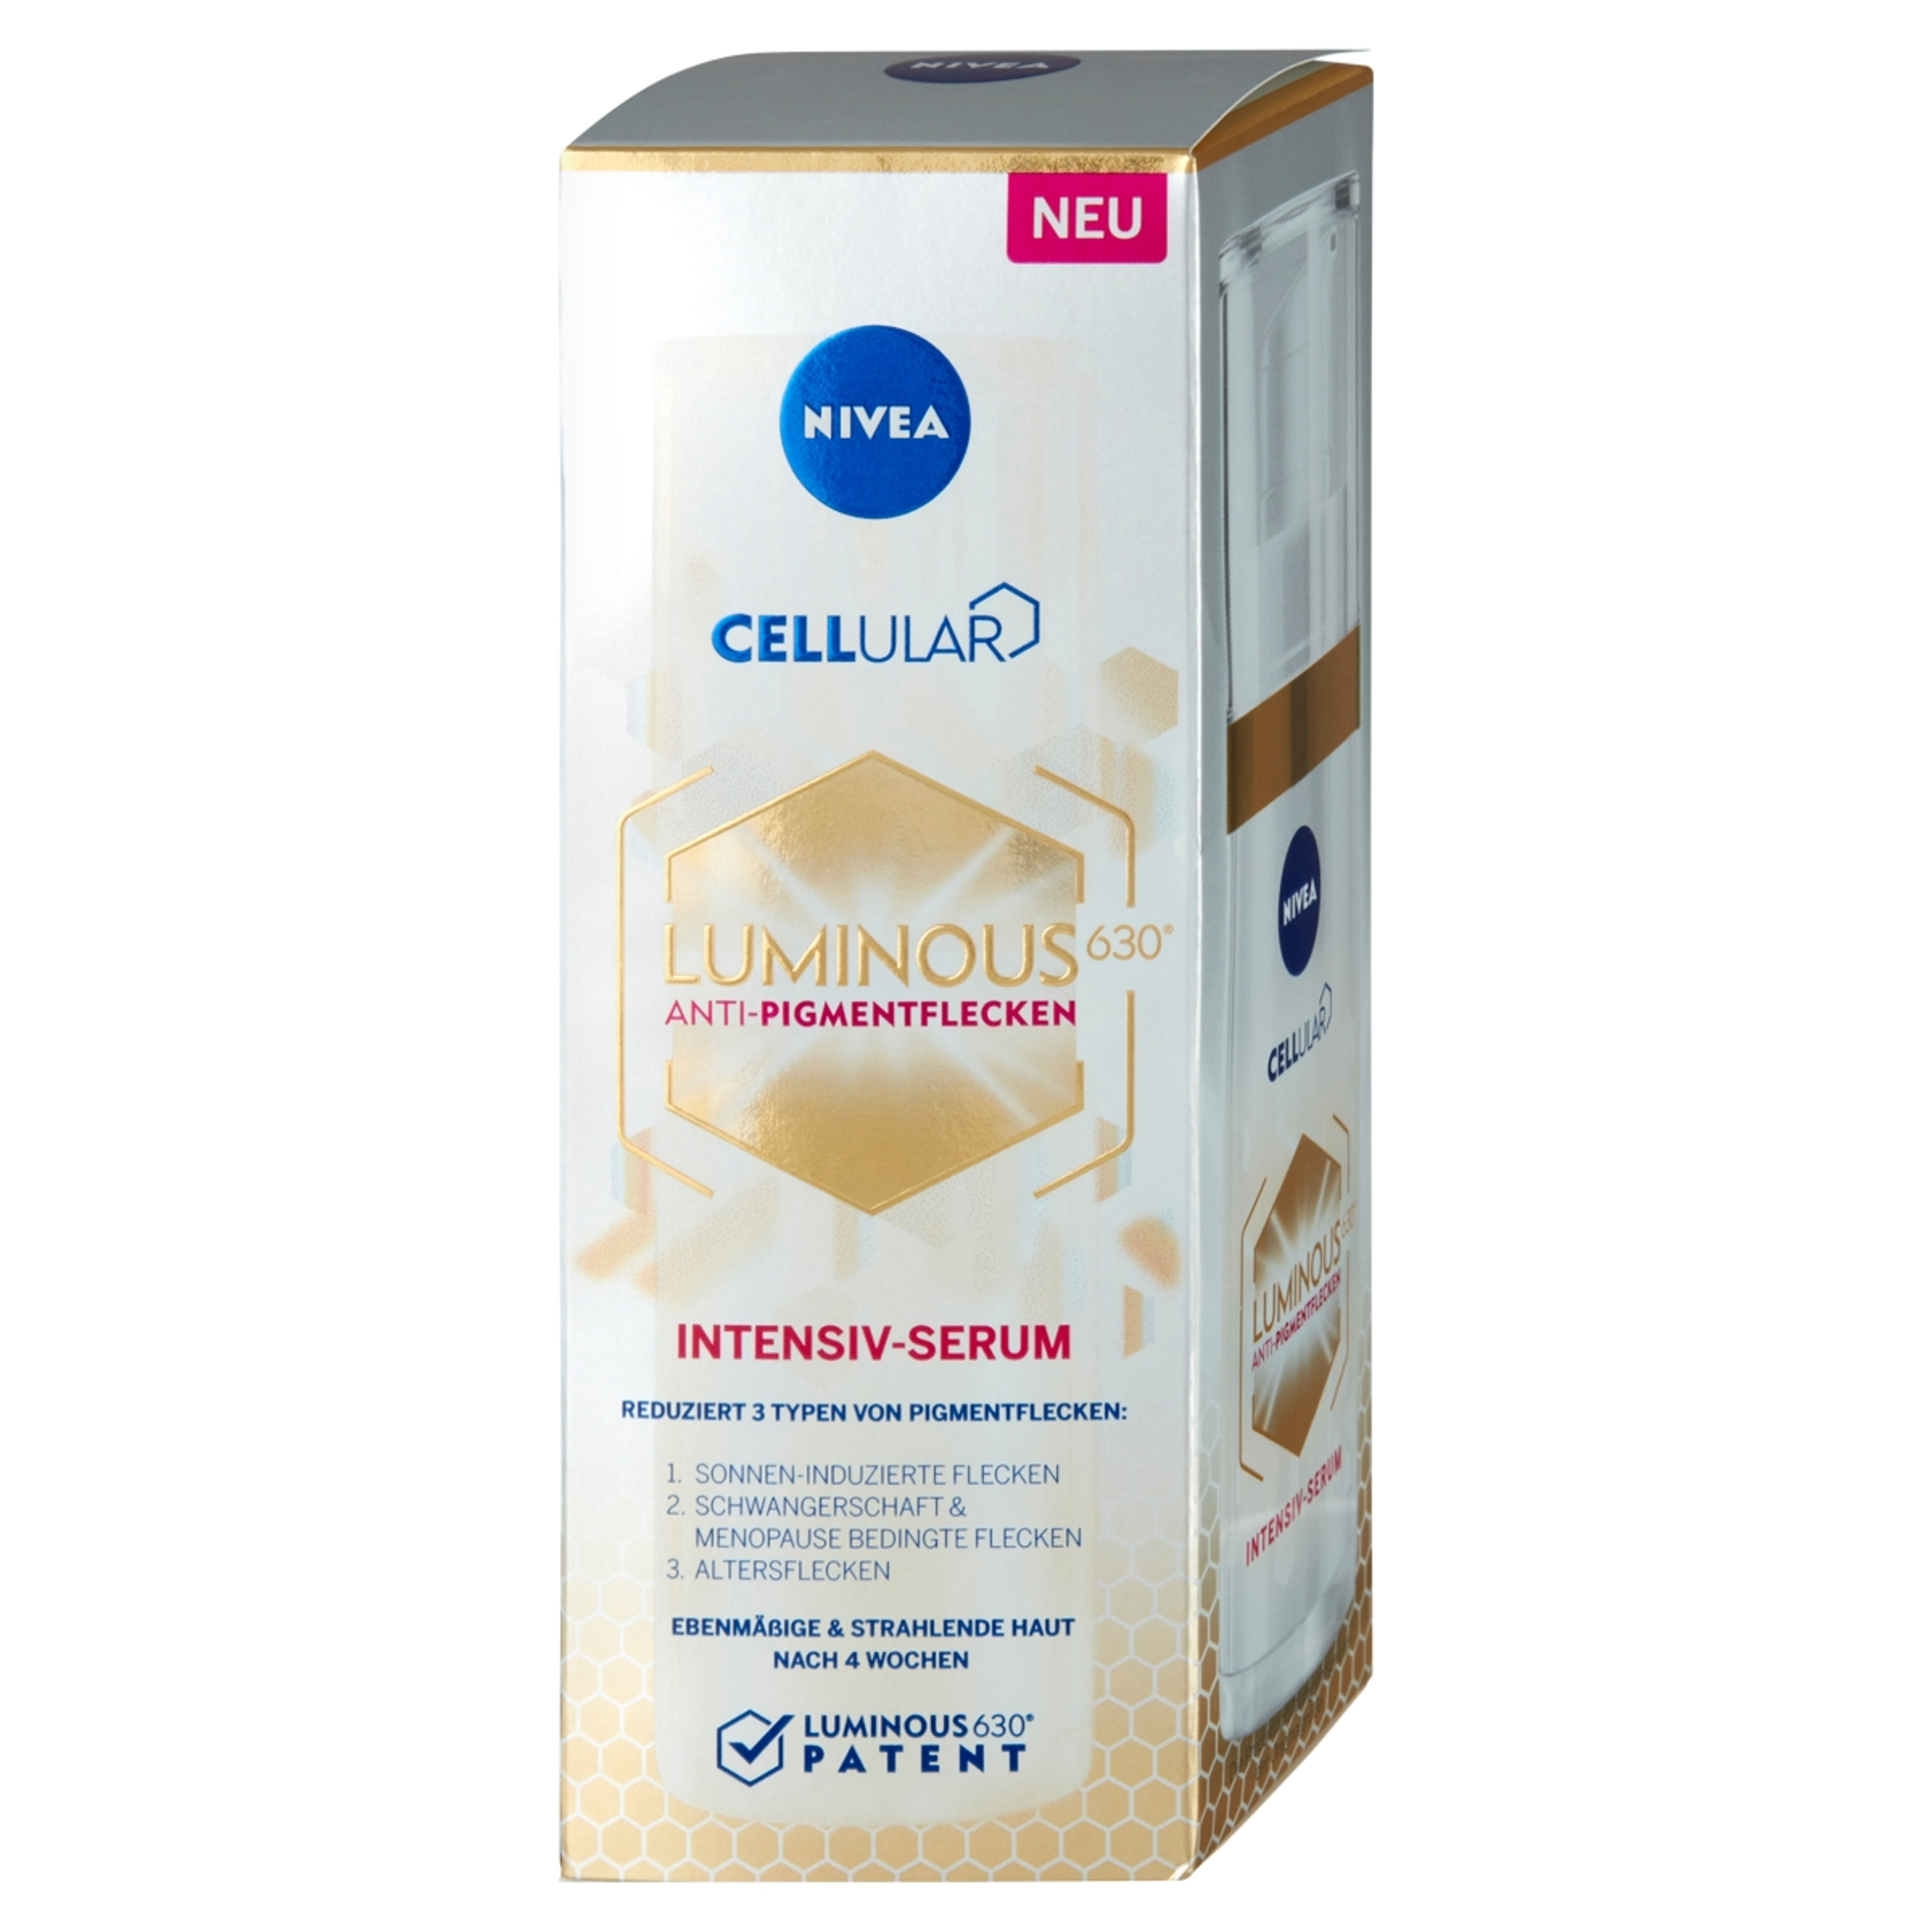 Nivea Cellular Luminous 630 pigmentfoltok elleni szérum - 30 ml-3